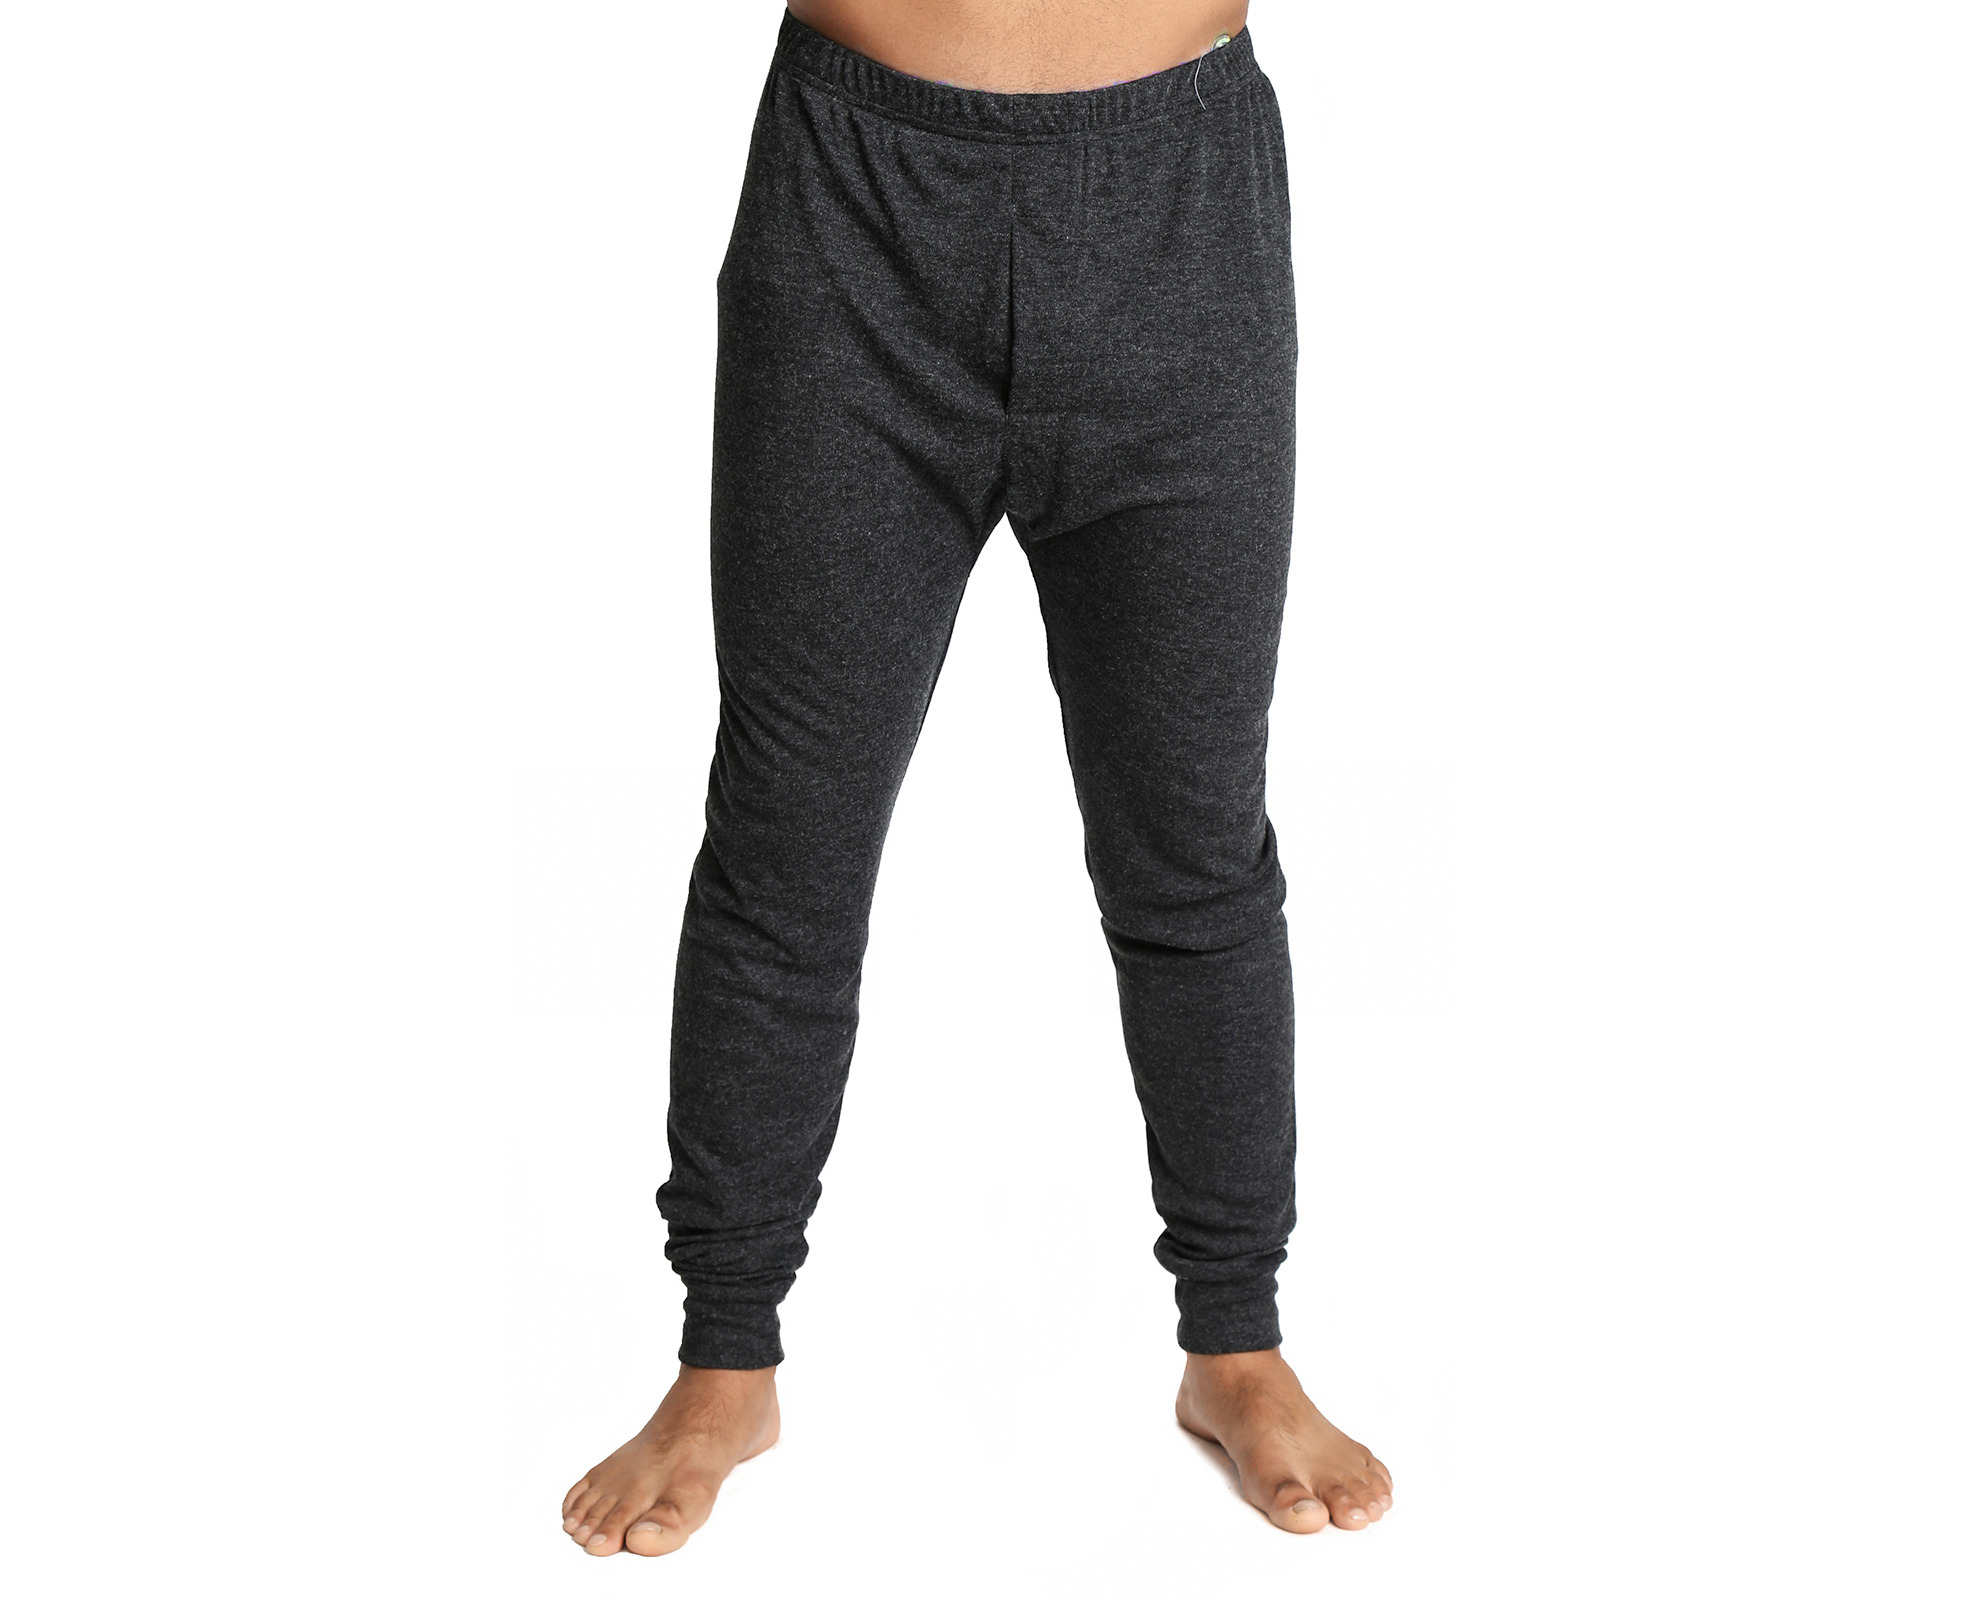 2pcs Women's Merino Wool Blend Top & Pants Thermal Set Long Johns Underwear